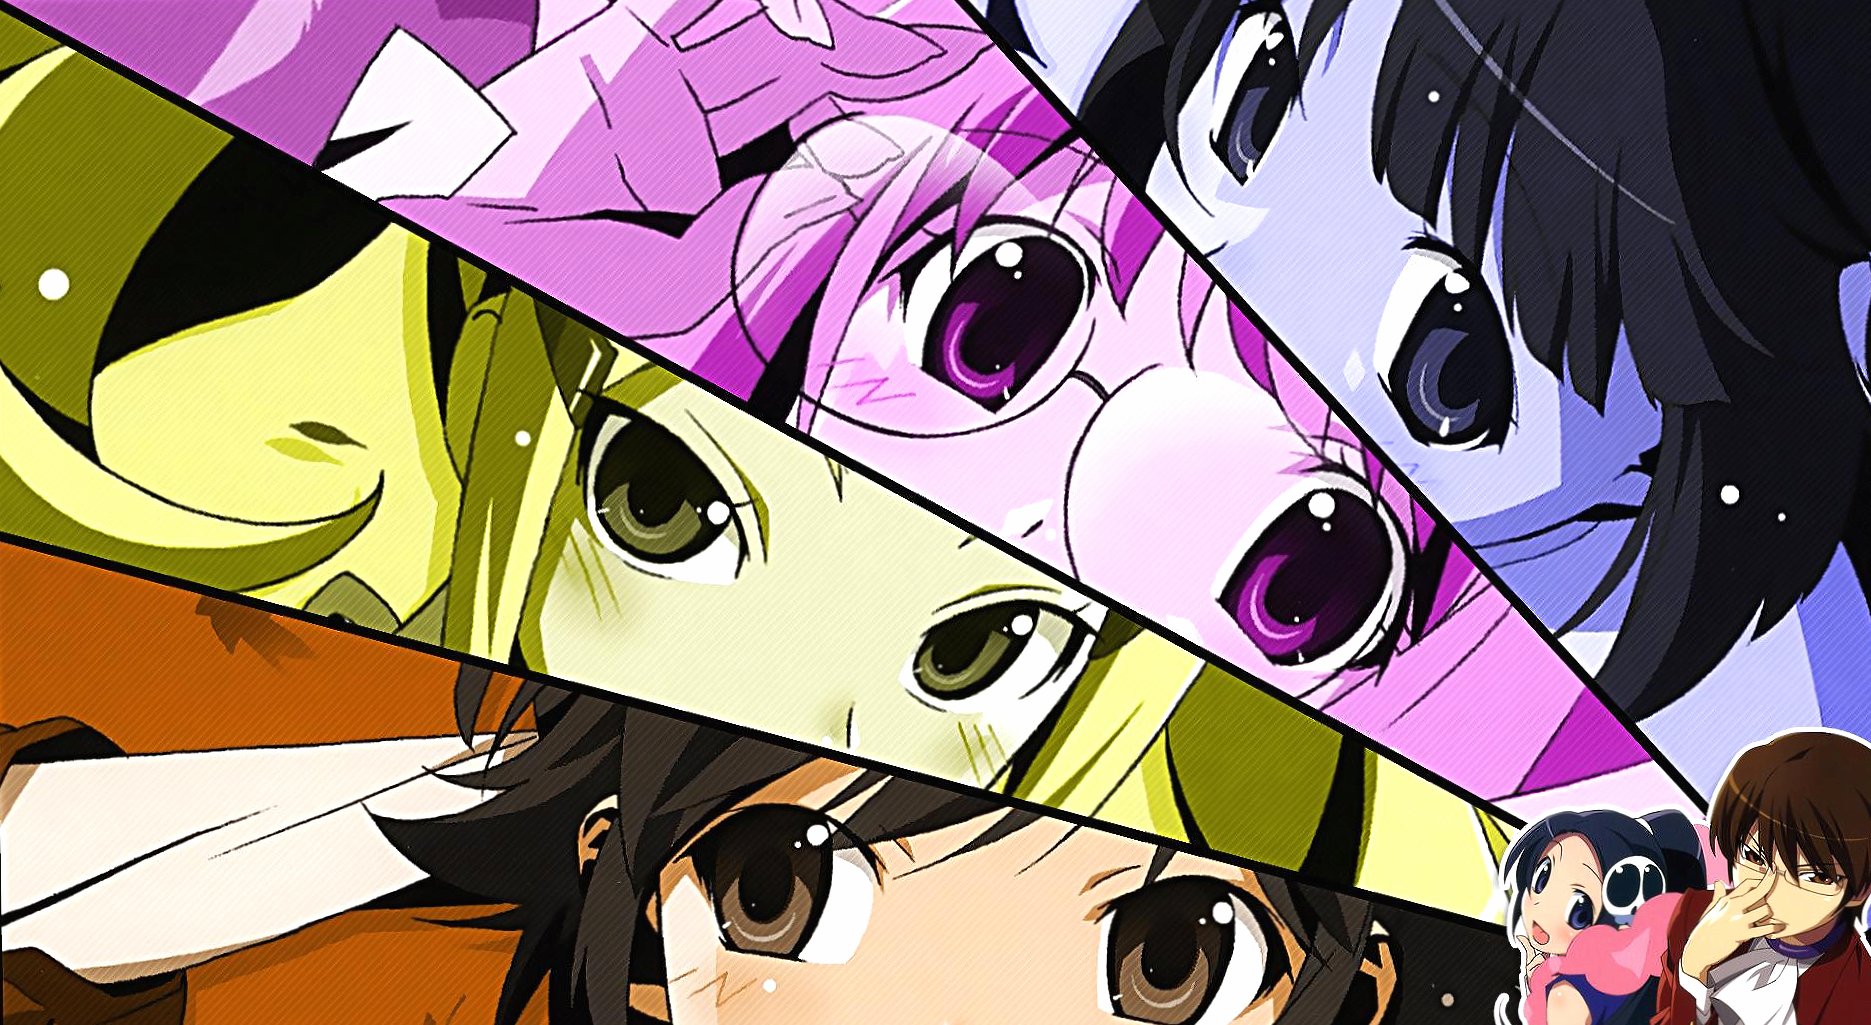 Kami nomi zo shiru sekai anime at 1024 x 1024 iPad size wallpapers HD quality